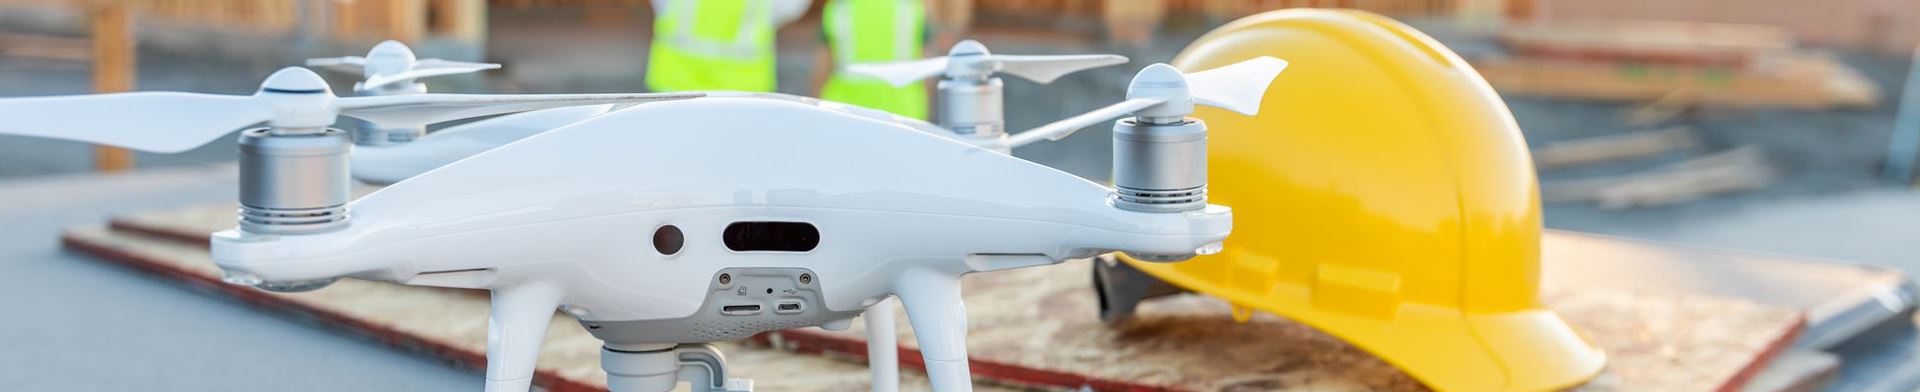 drones na construção civil - construtora ubiratan